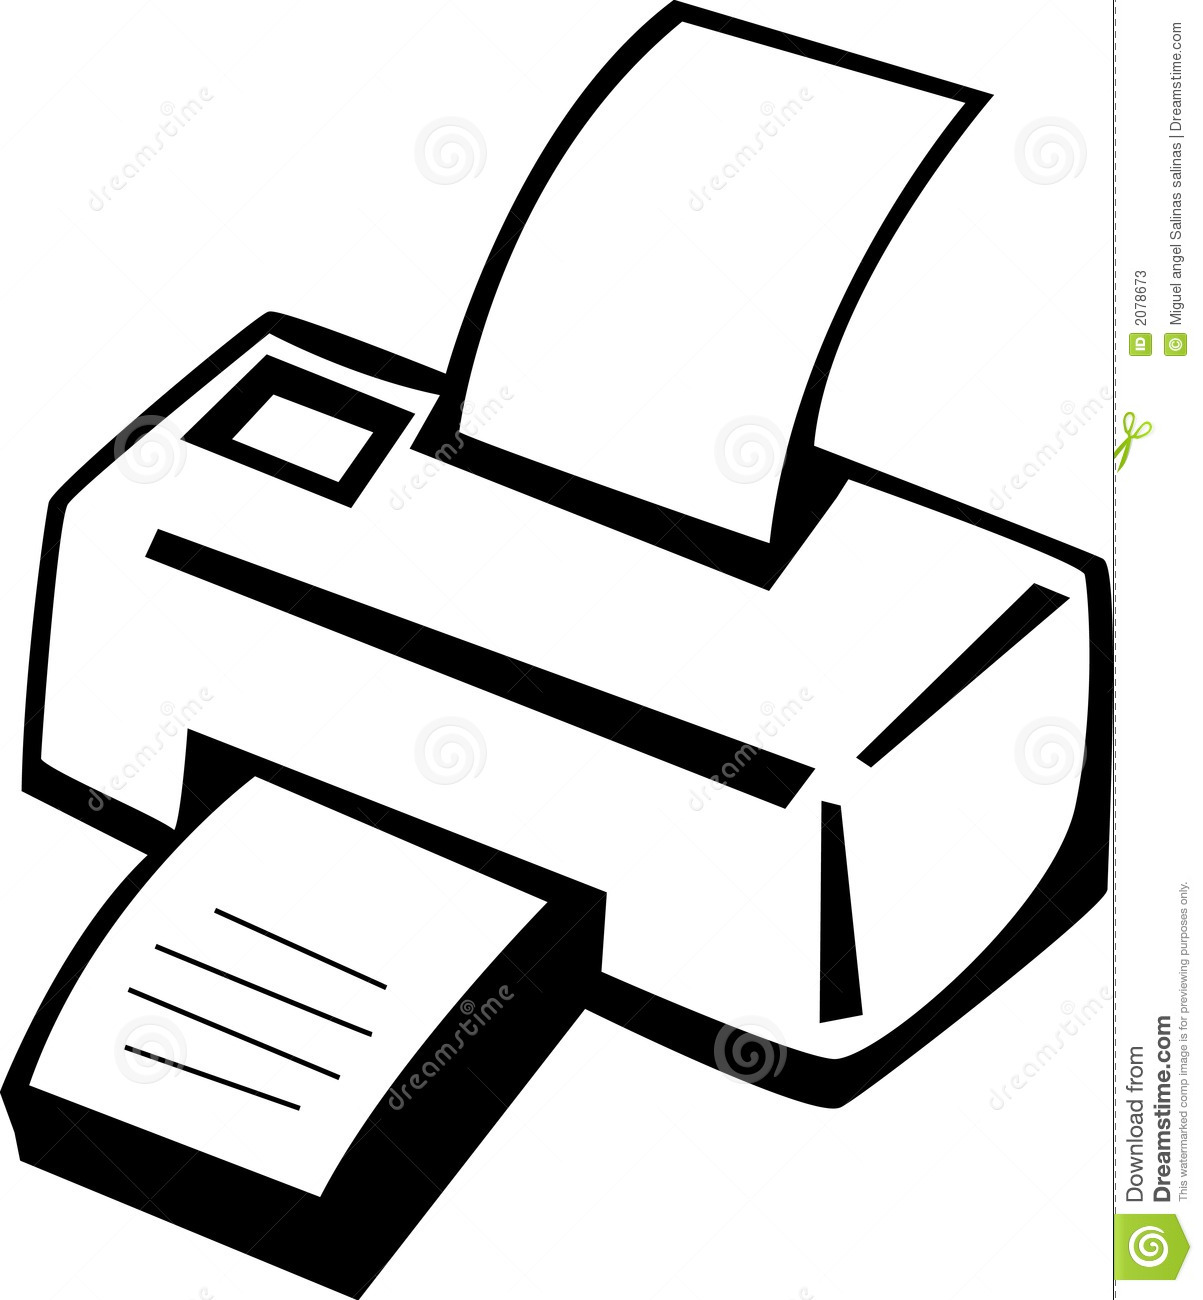 Printer Fax Machine Clip Art